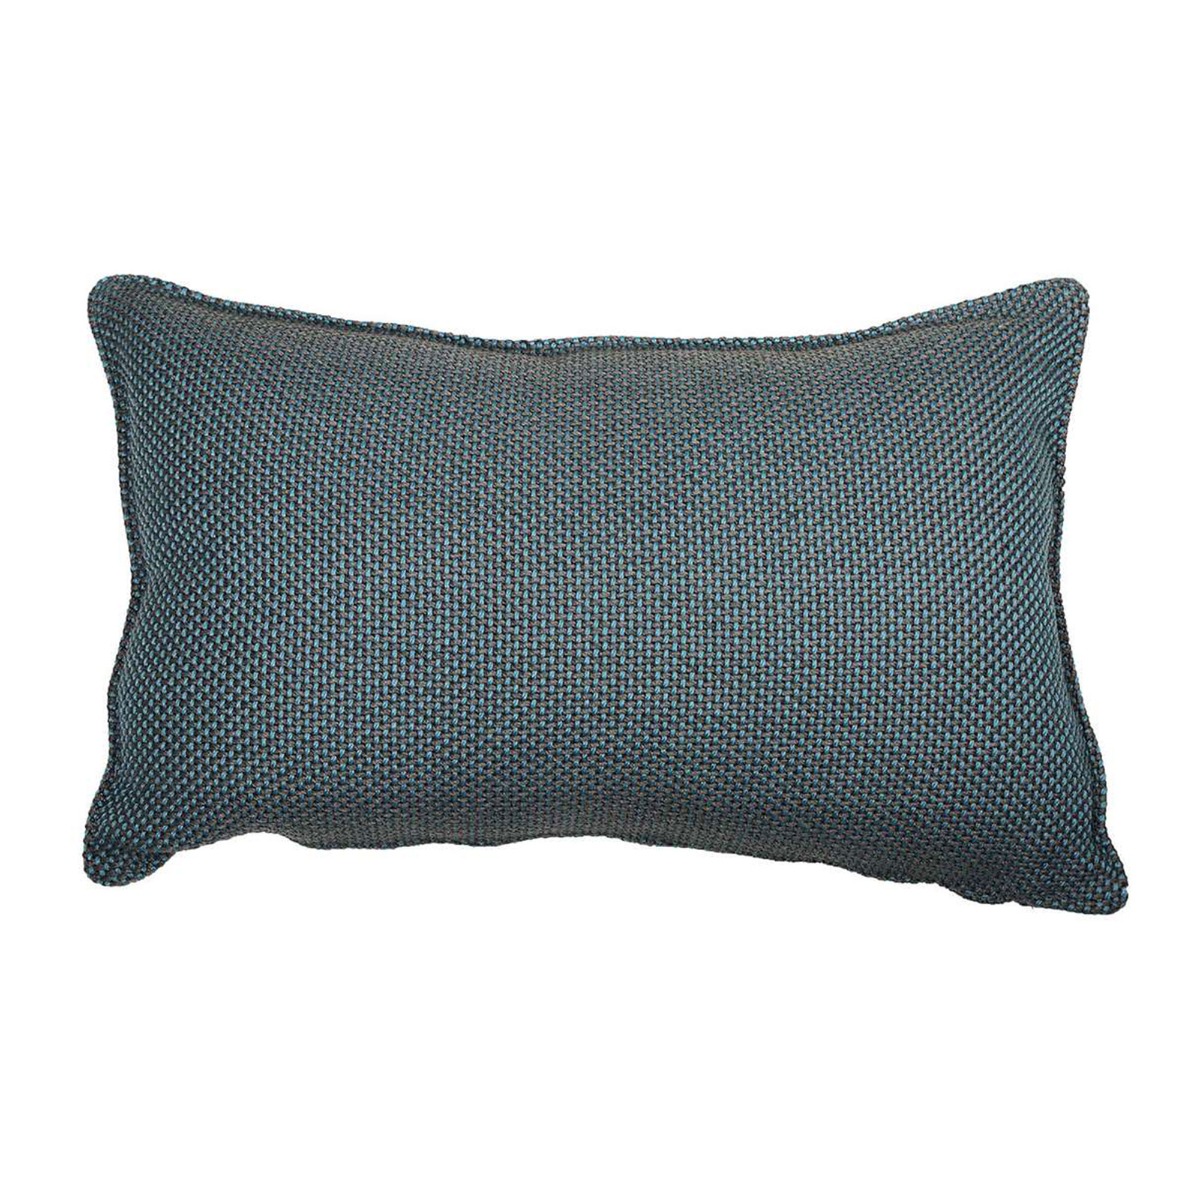 Cane Line Focus Scatter Cushion 52x32x12cm, Square, Blue Polypropylene | Barker & Stonehouse